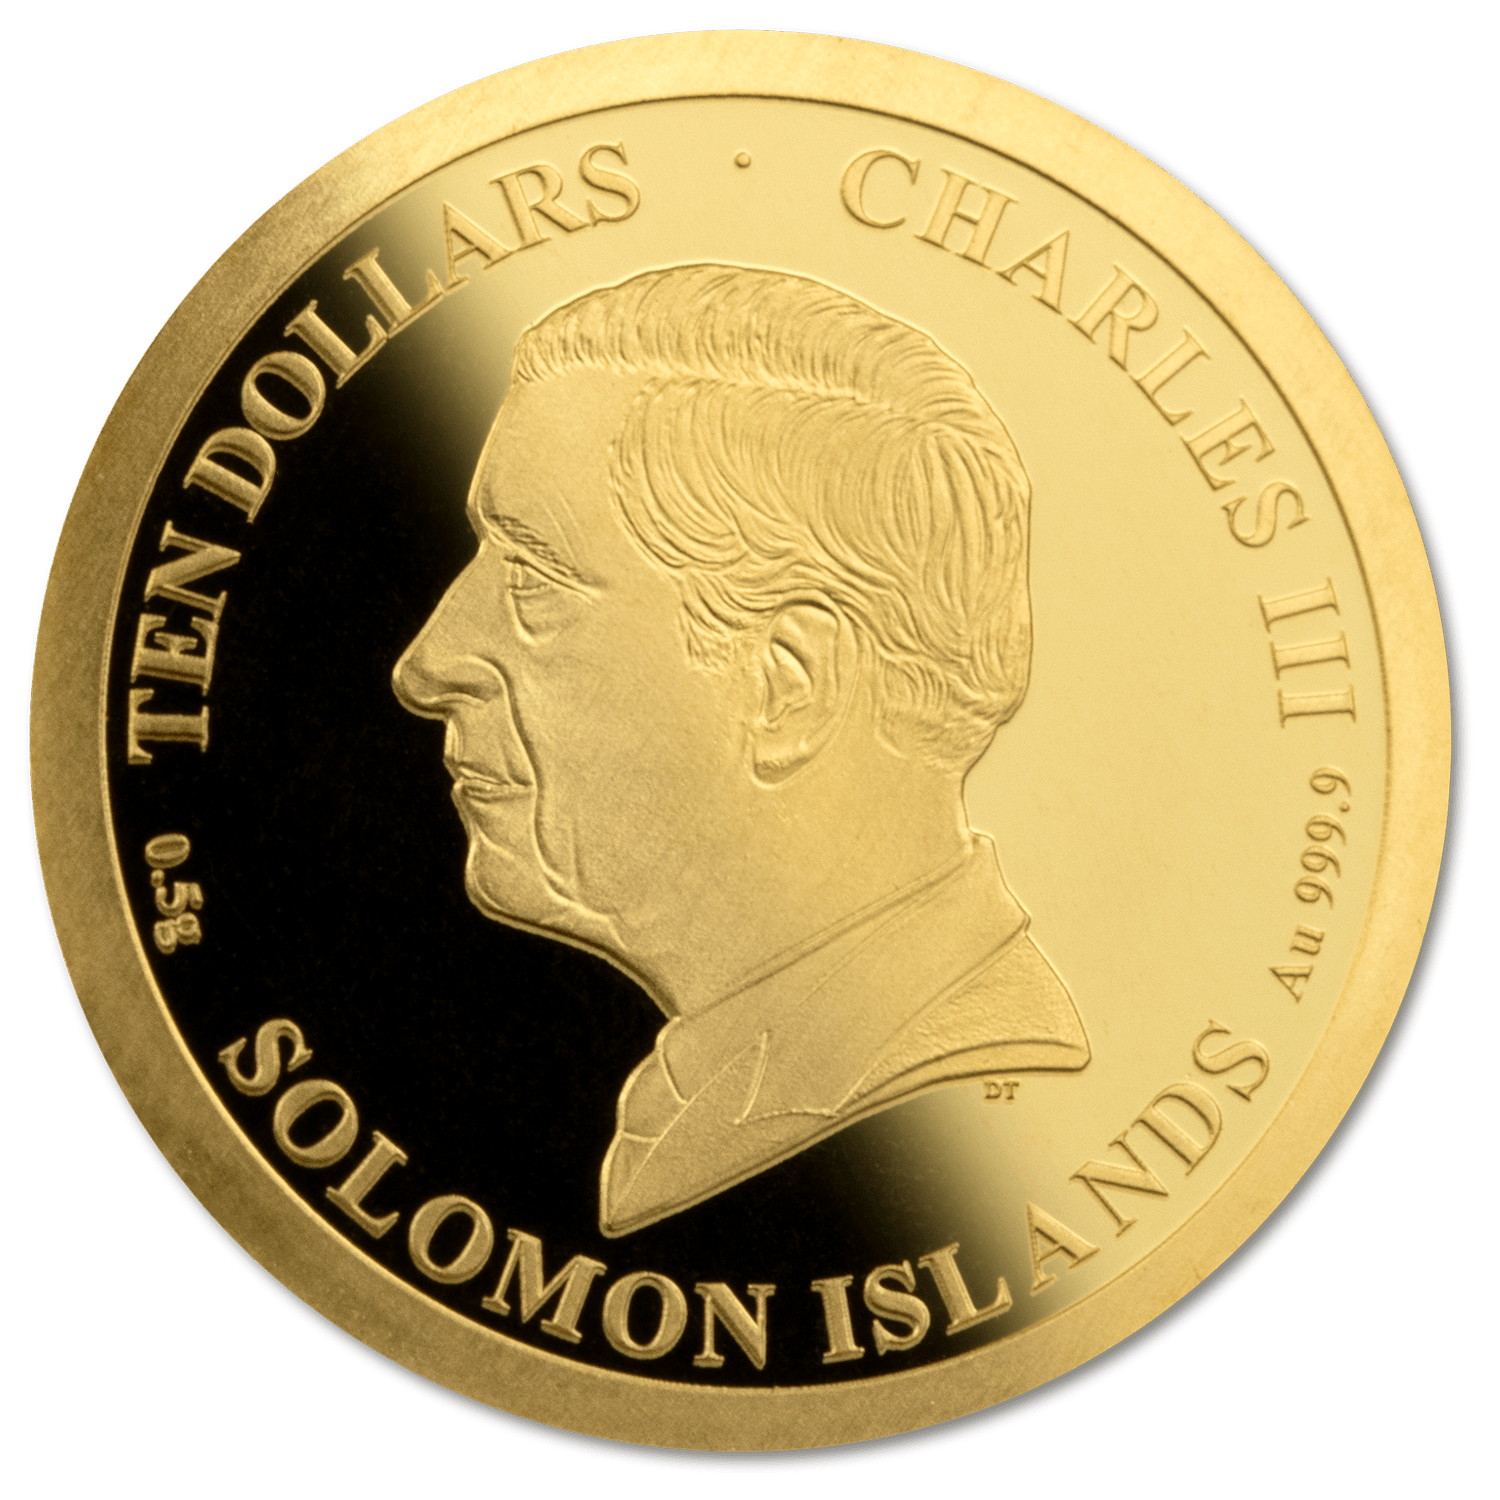 TROPHY UEFA Euro Cup Small Gold Coin $10 Solomon Islands 2024 - PARTHAVA COIN